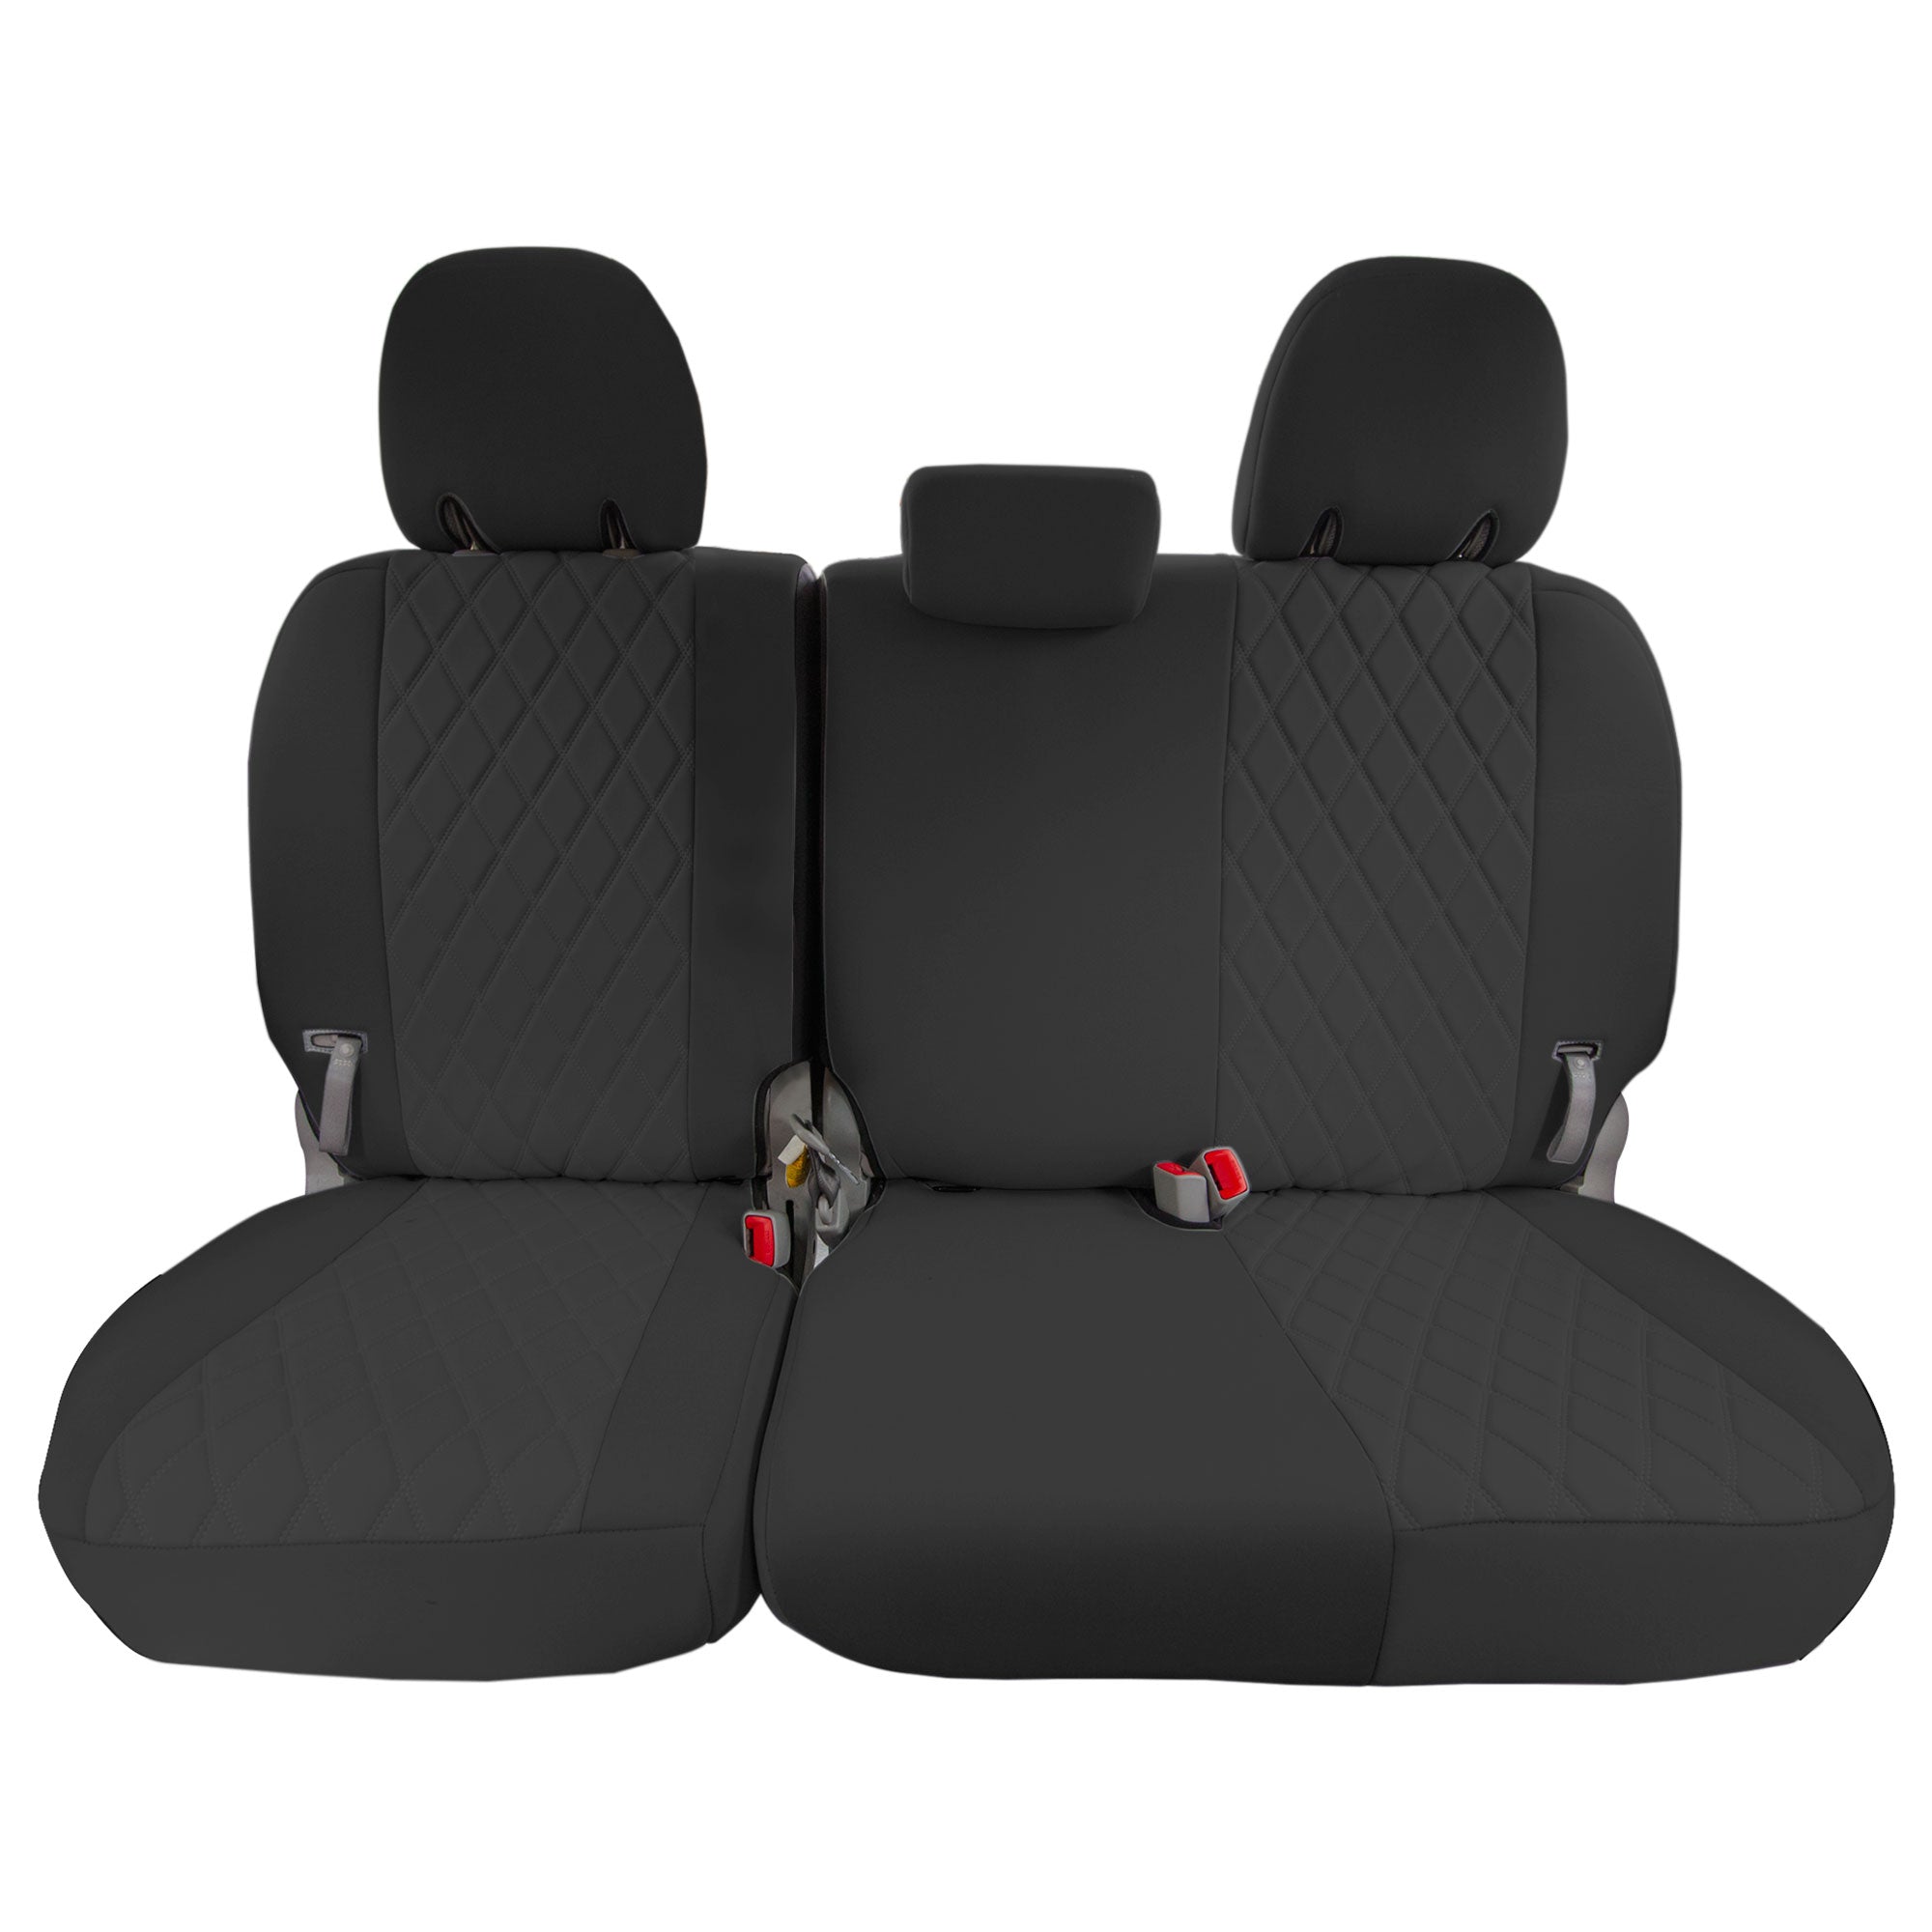 Toyota Sienna - 2011 - 2020 - 3rd Row Set Seat Covers - Black Ultraflex Neoprene